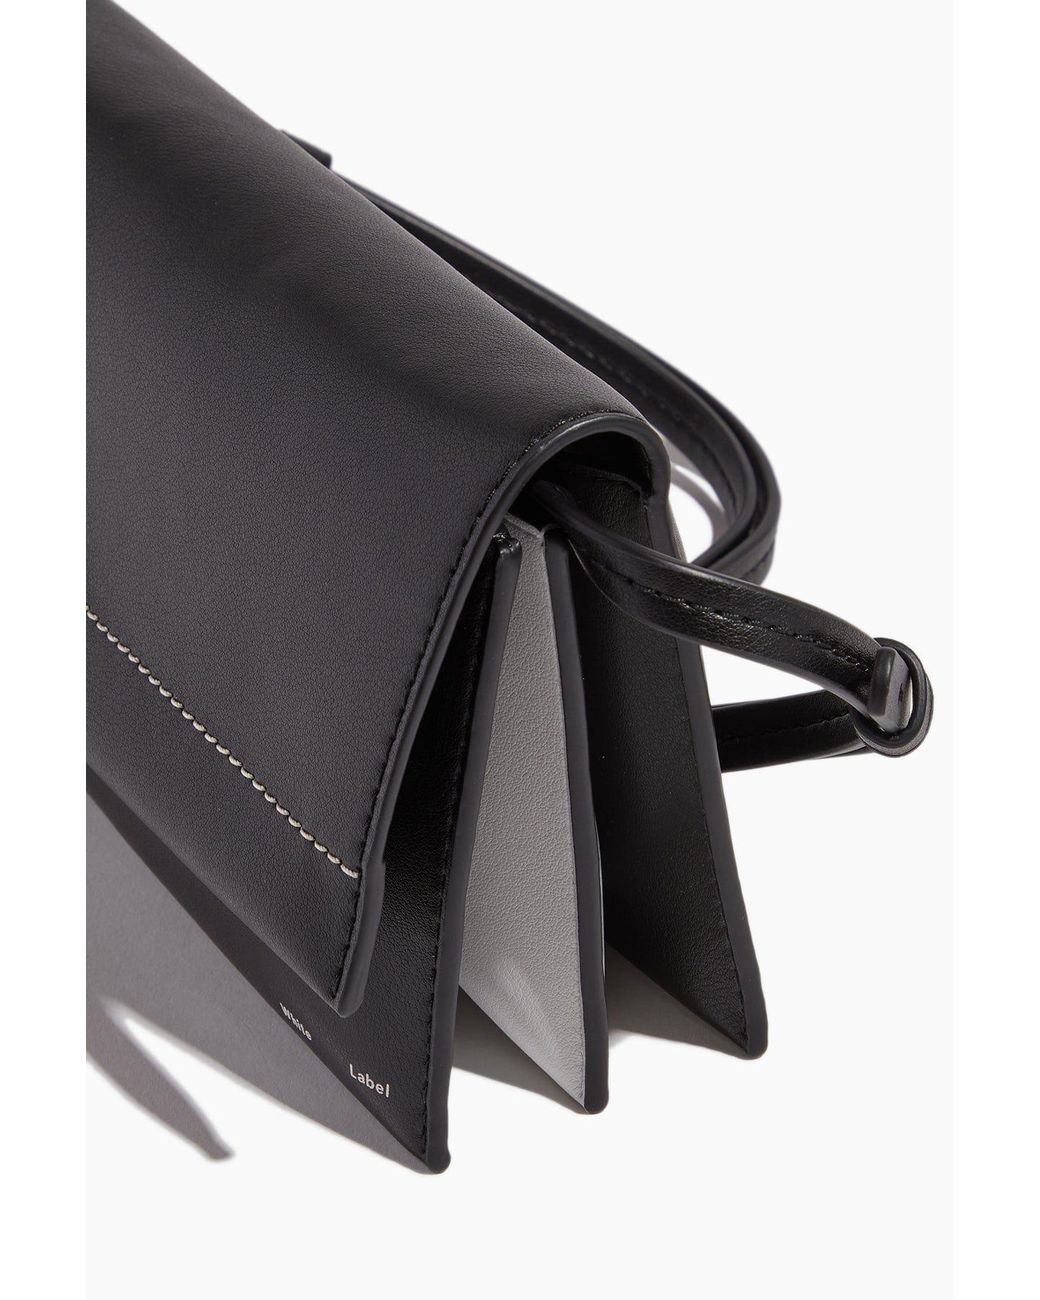 Proenza Schouler White Label SMALL ACCORDION FLAP BAG - Handbag - black -  Zalando.de